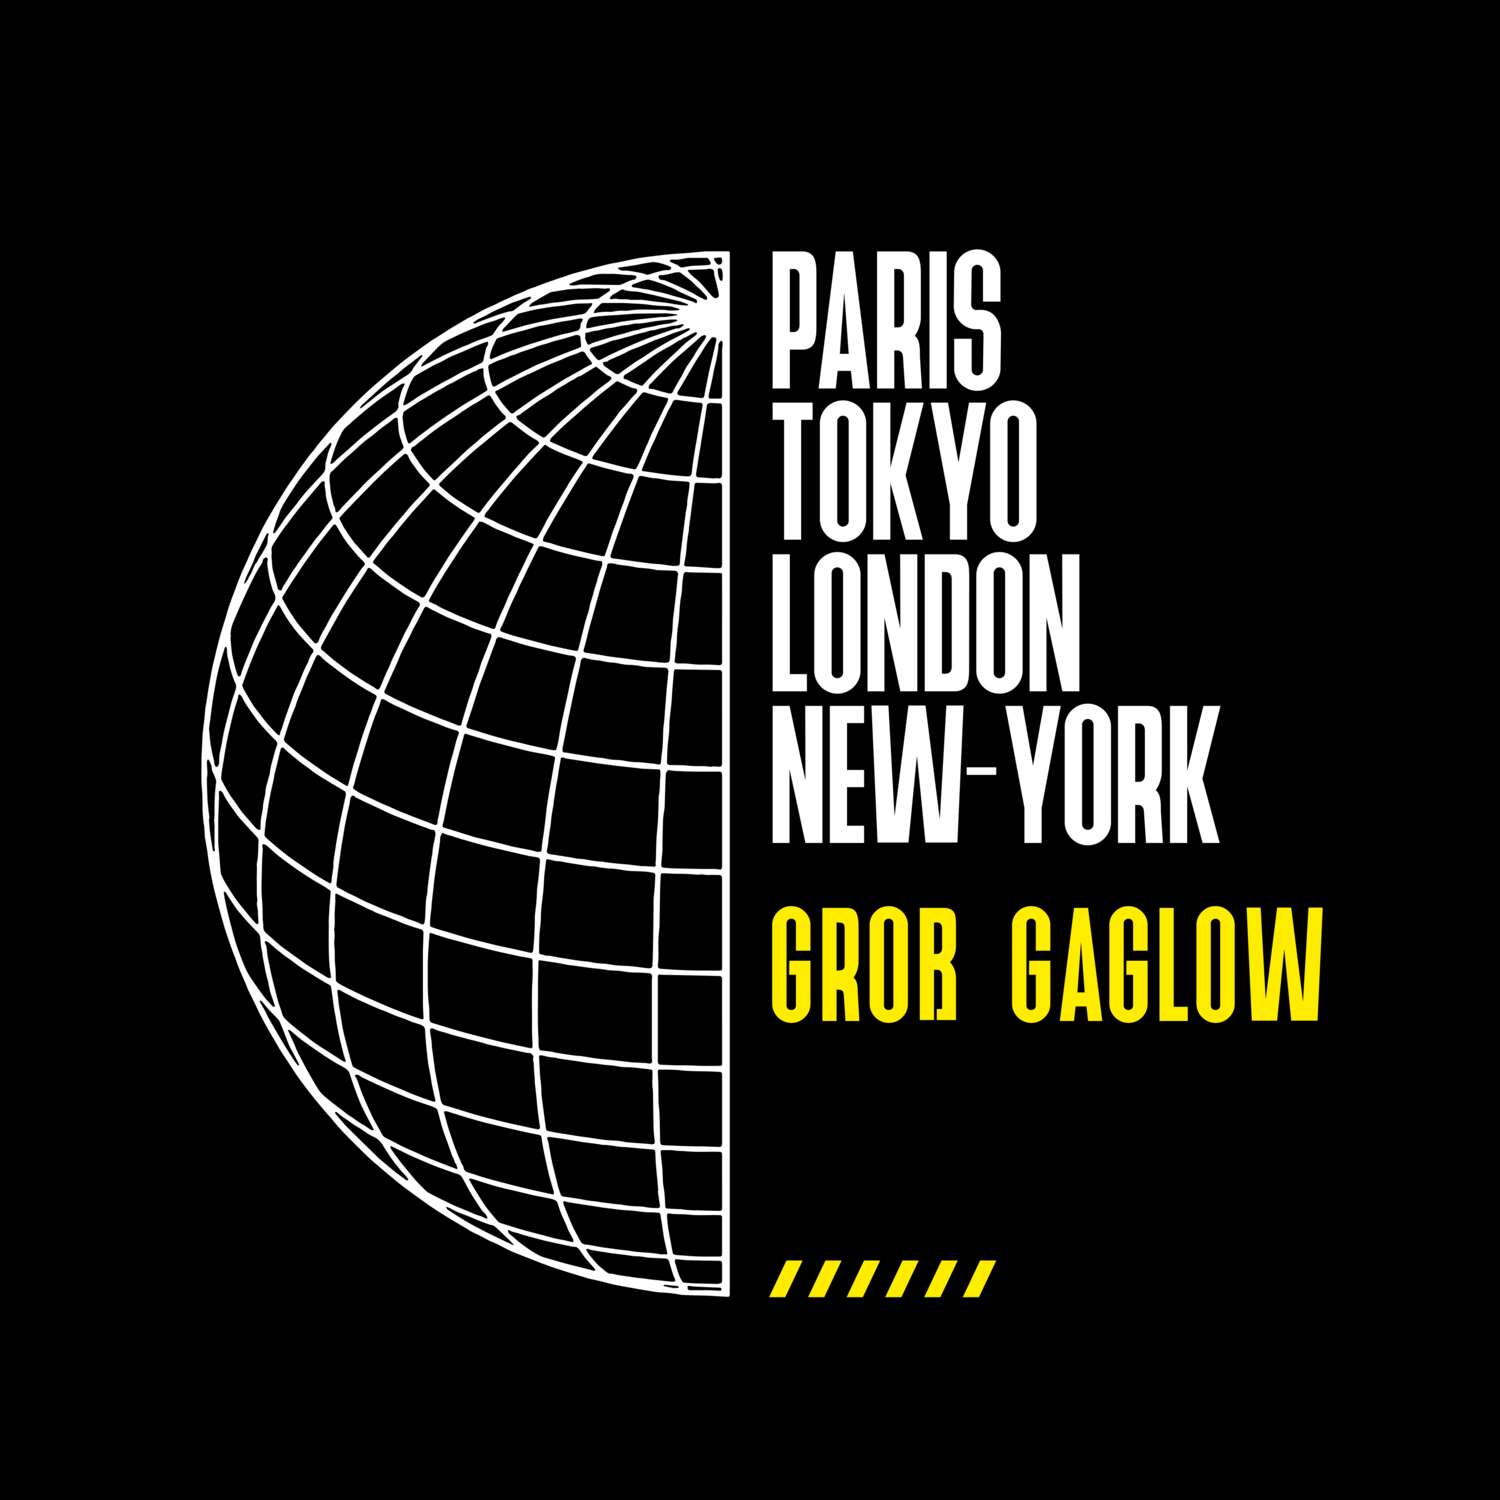 Groß Gaglow T-Shirt »Paris Tokyo London«